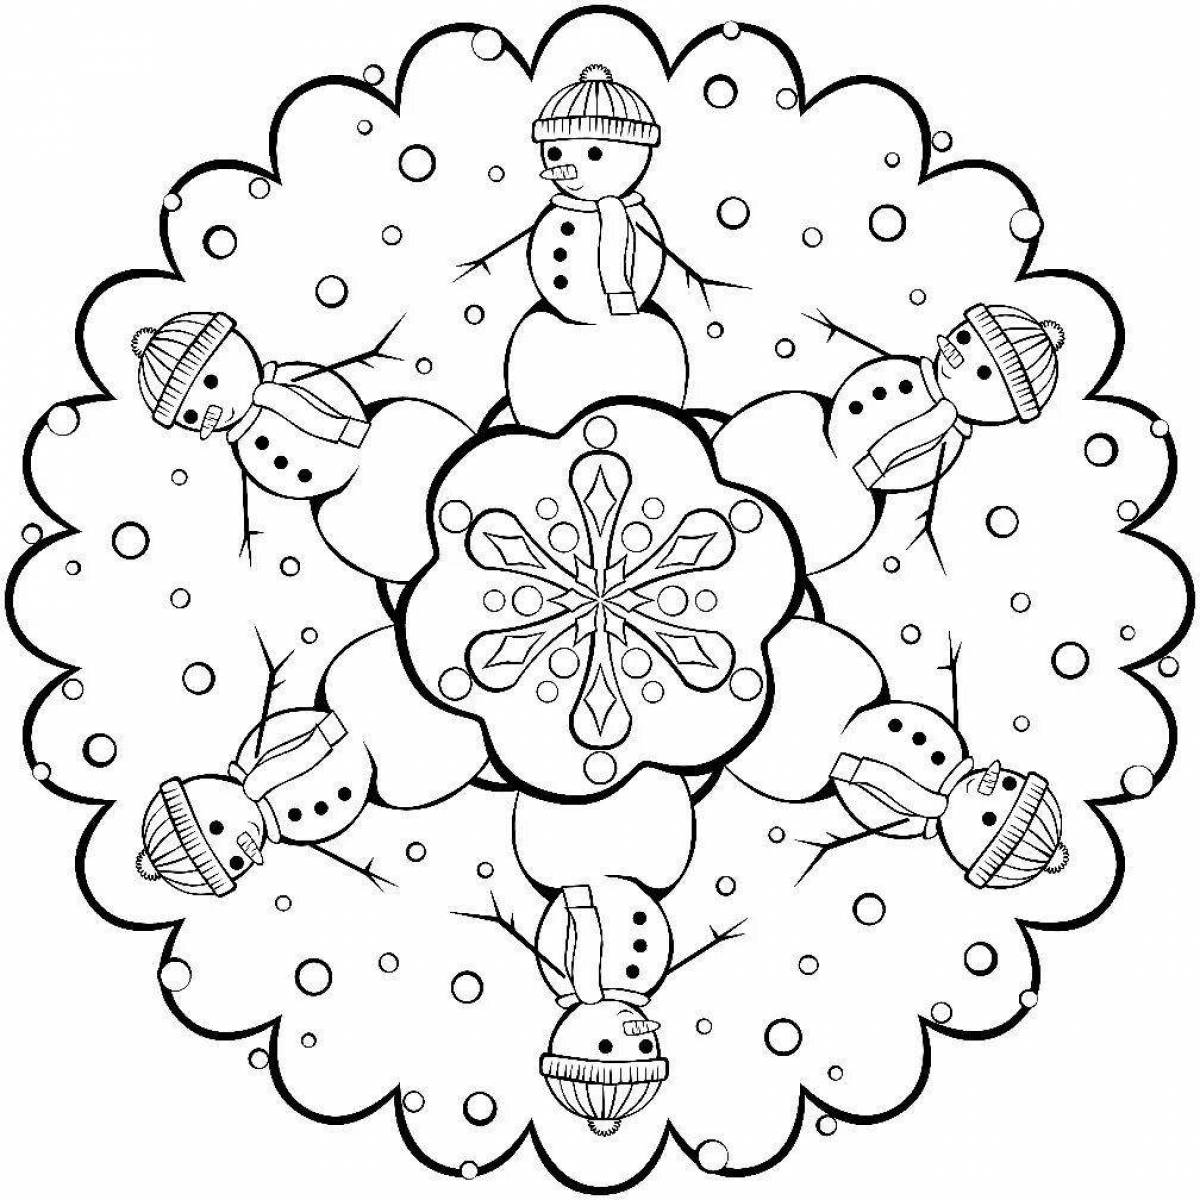 Fantastic Christmas snowflake coloring page